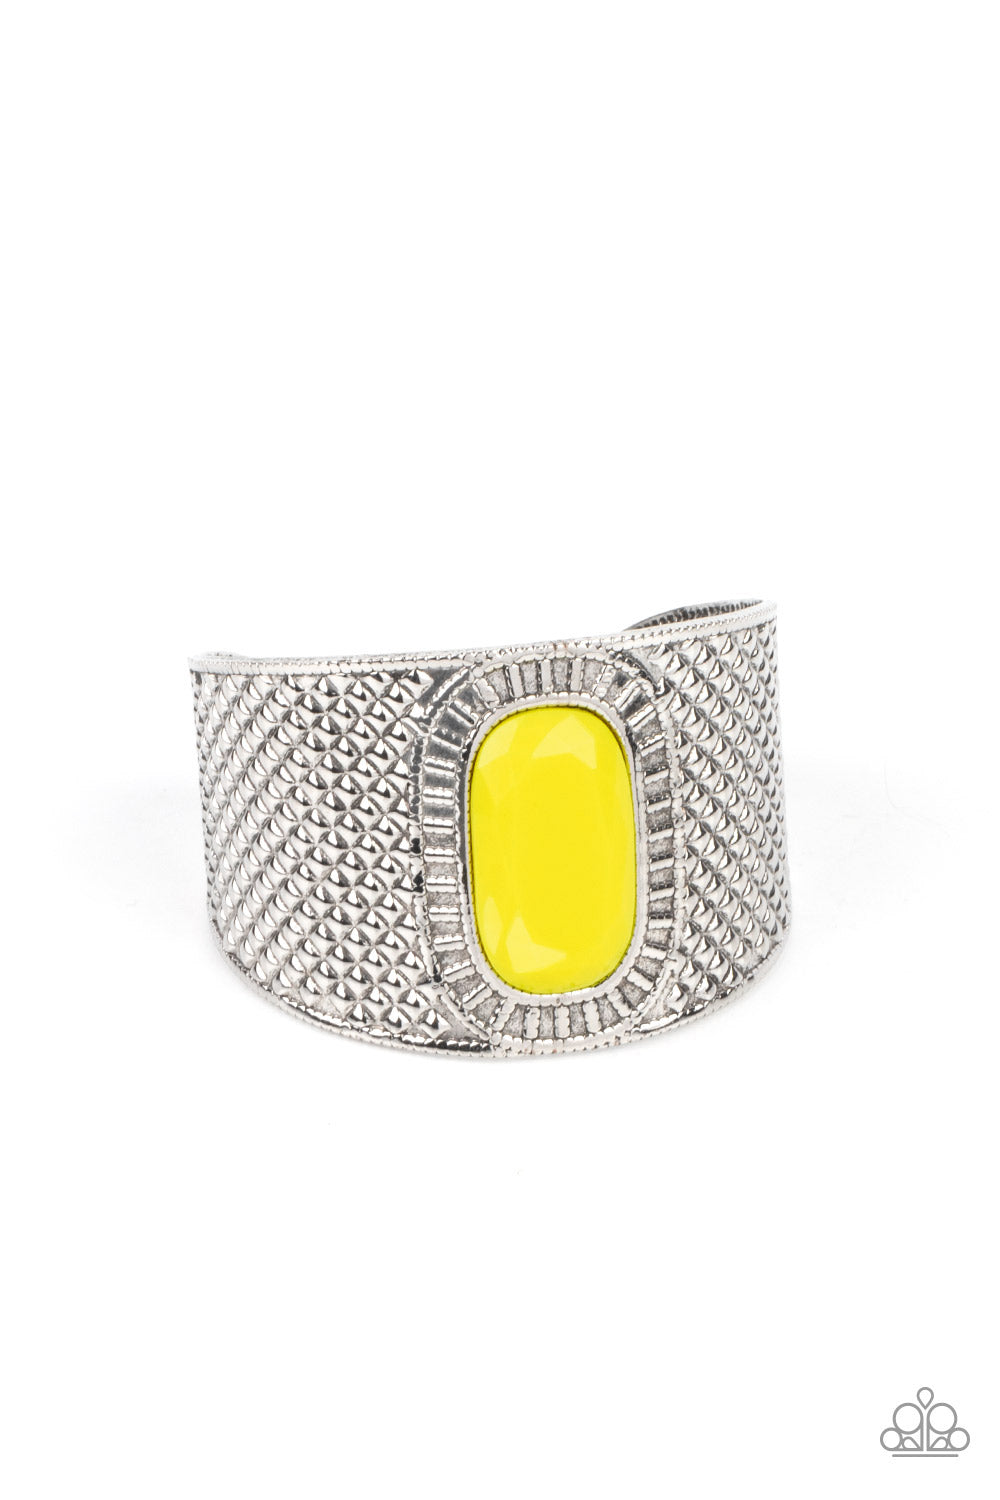 Poshly Pharaoh - Yellow cuff bracelet